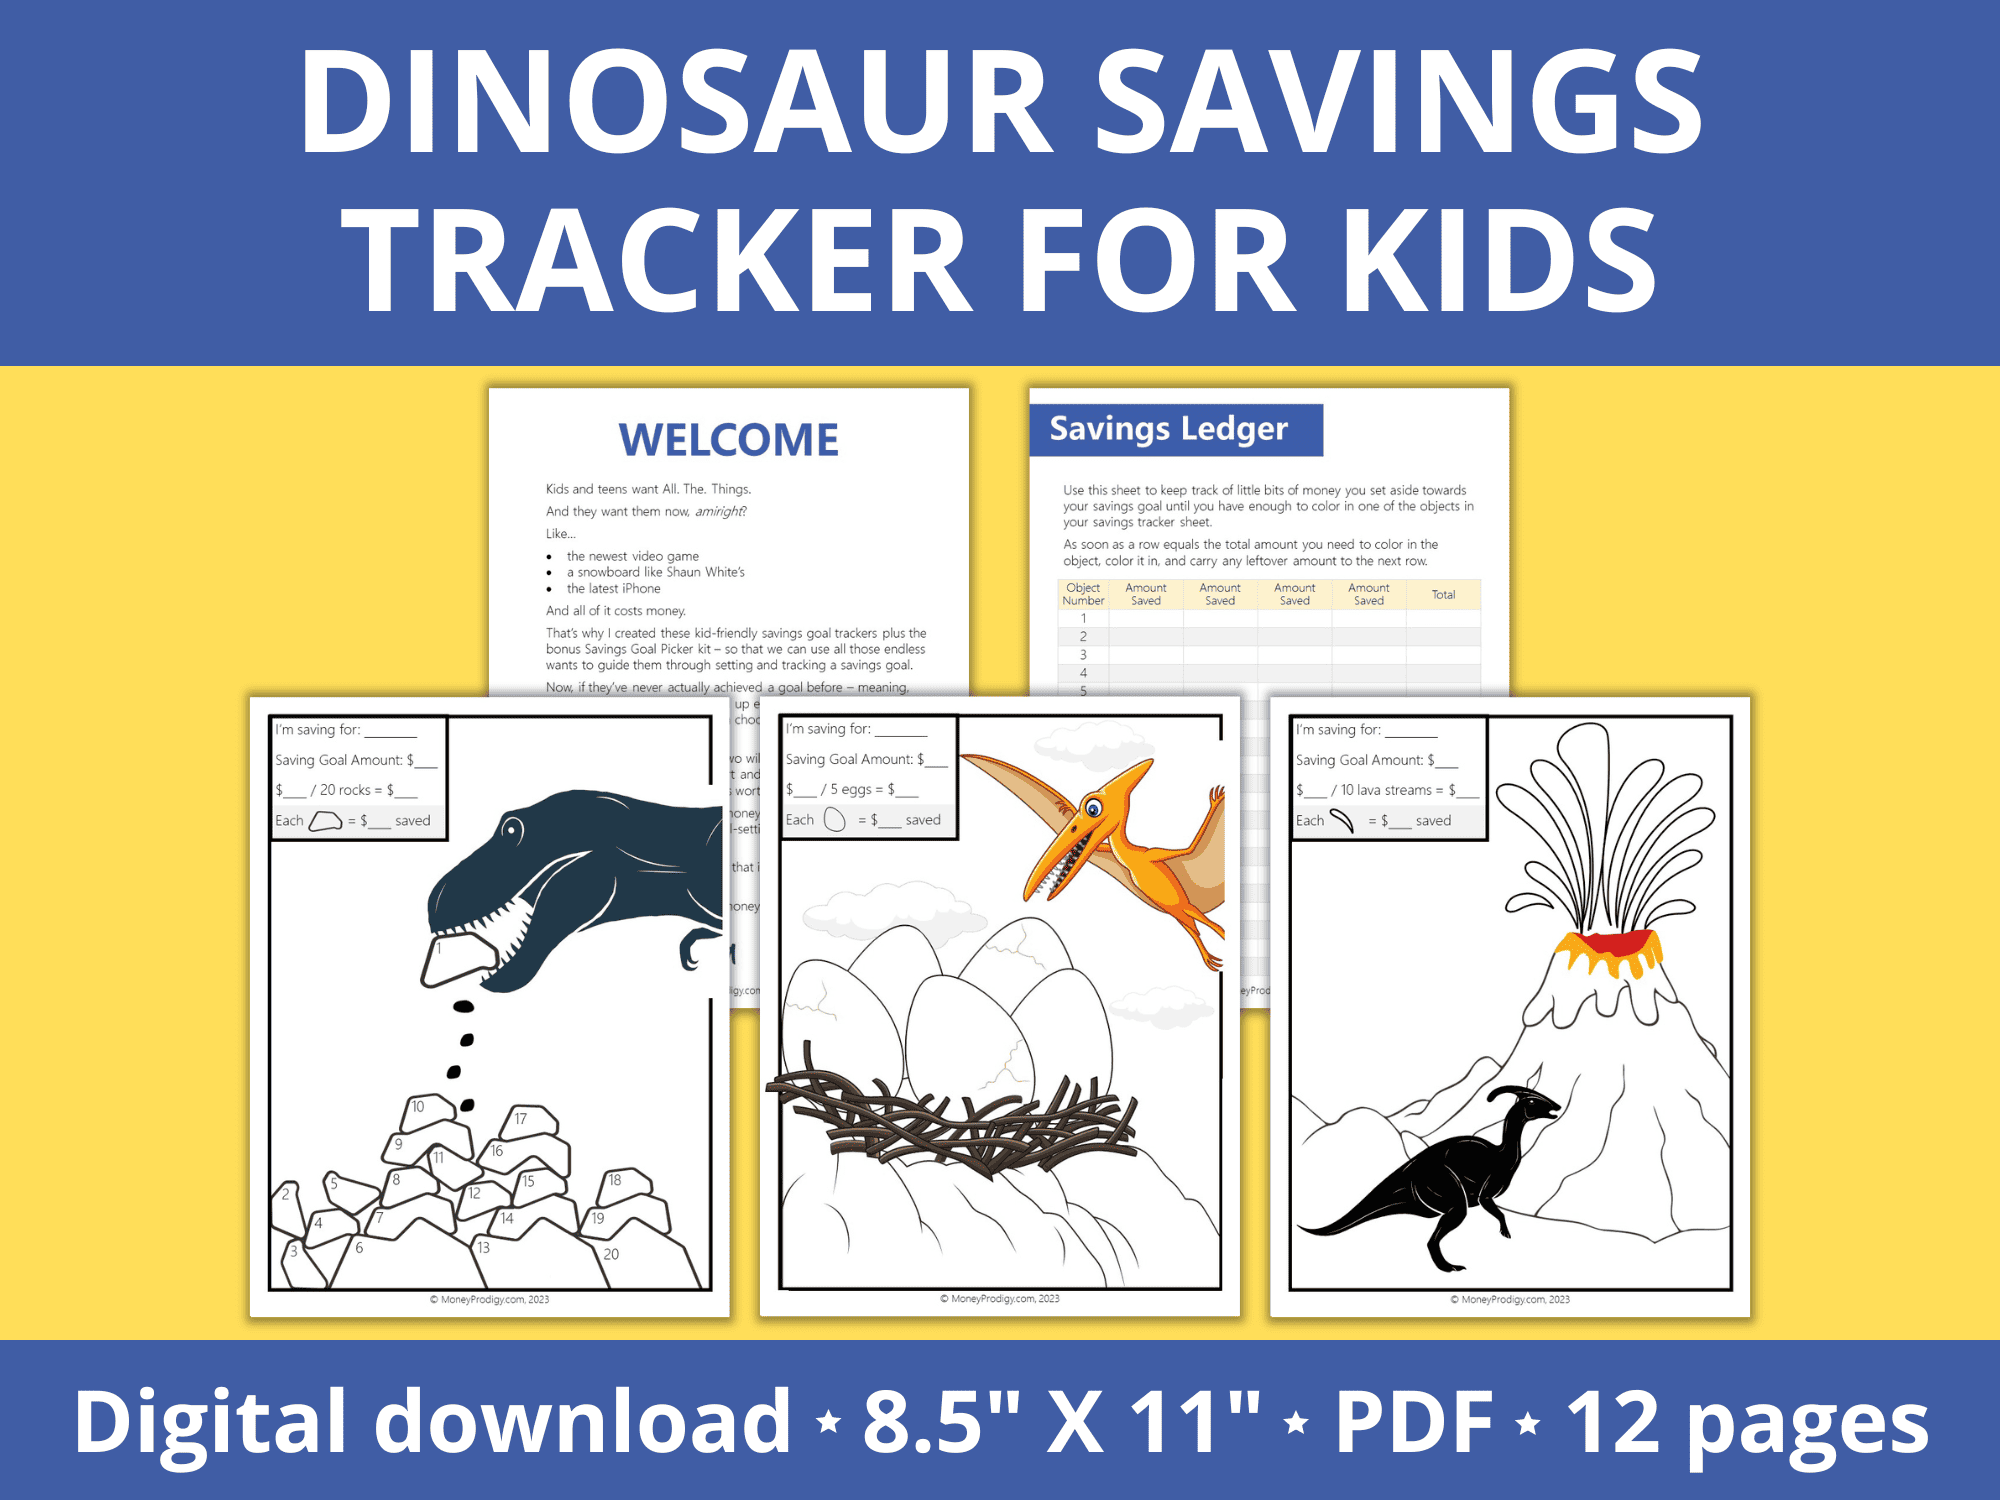 dinosaur savings tracker flatlay on orange background